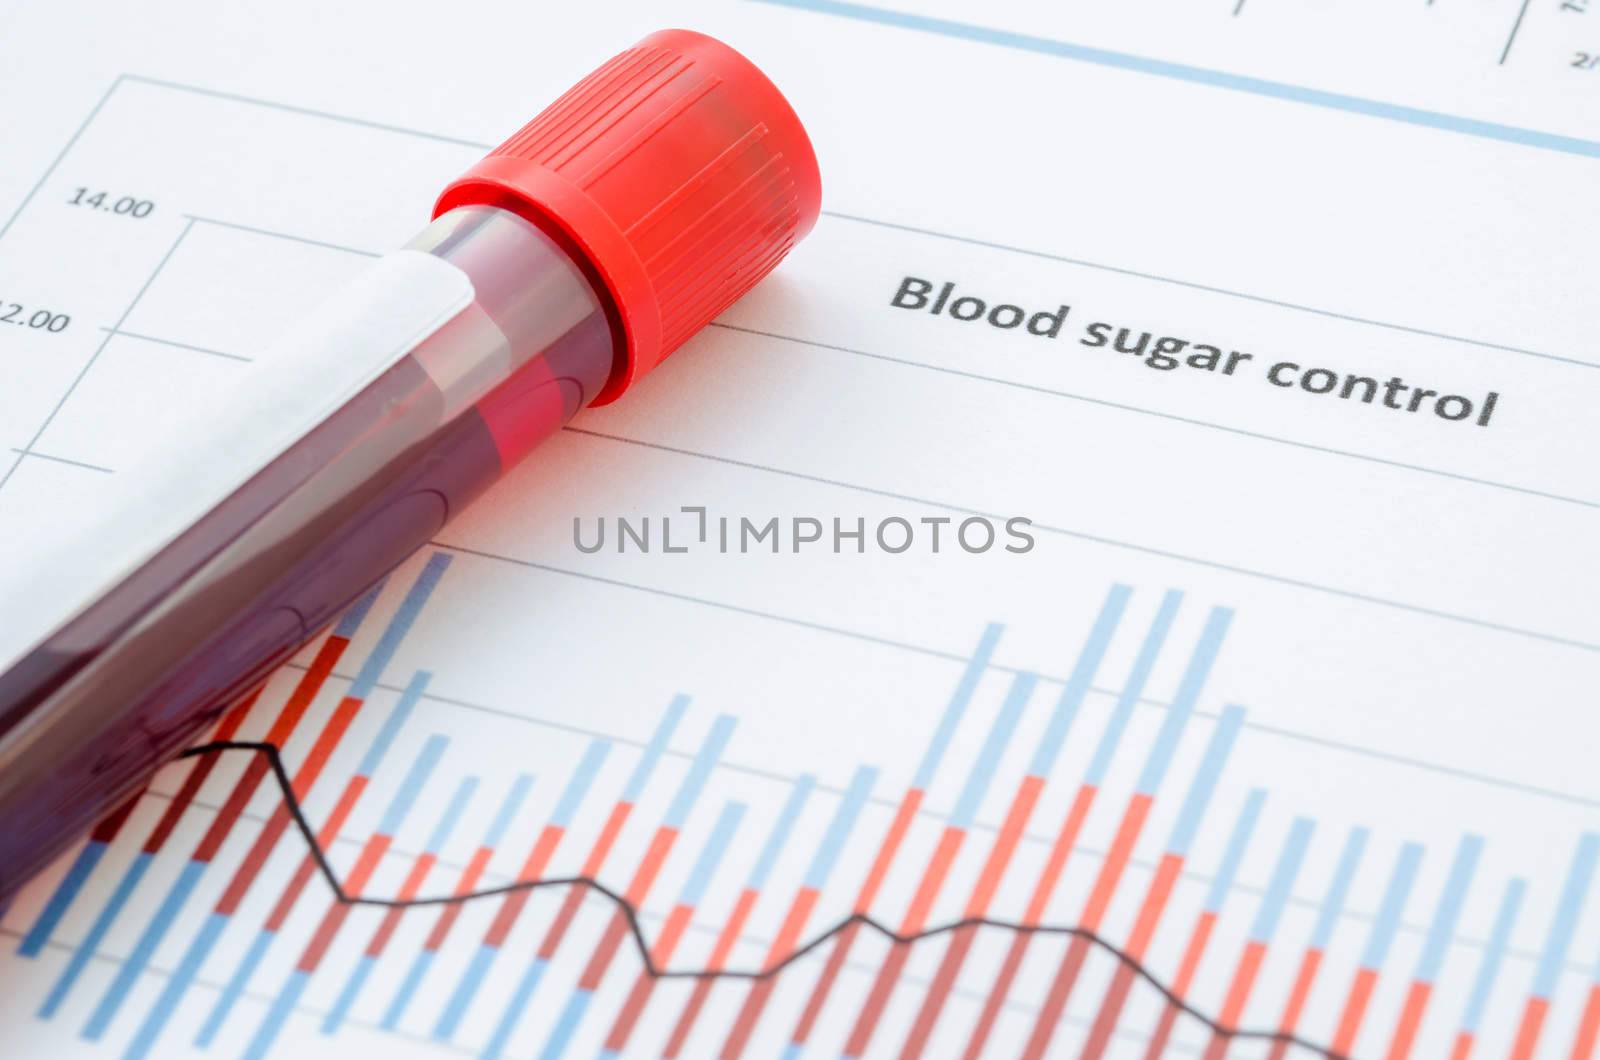 Sample blood for screening diabetic test. by Gamjai